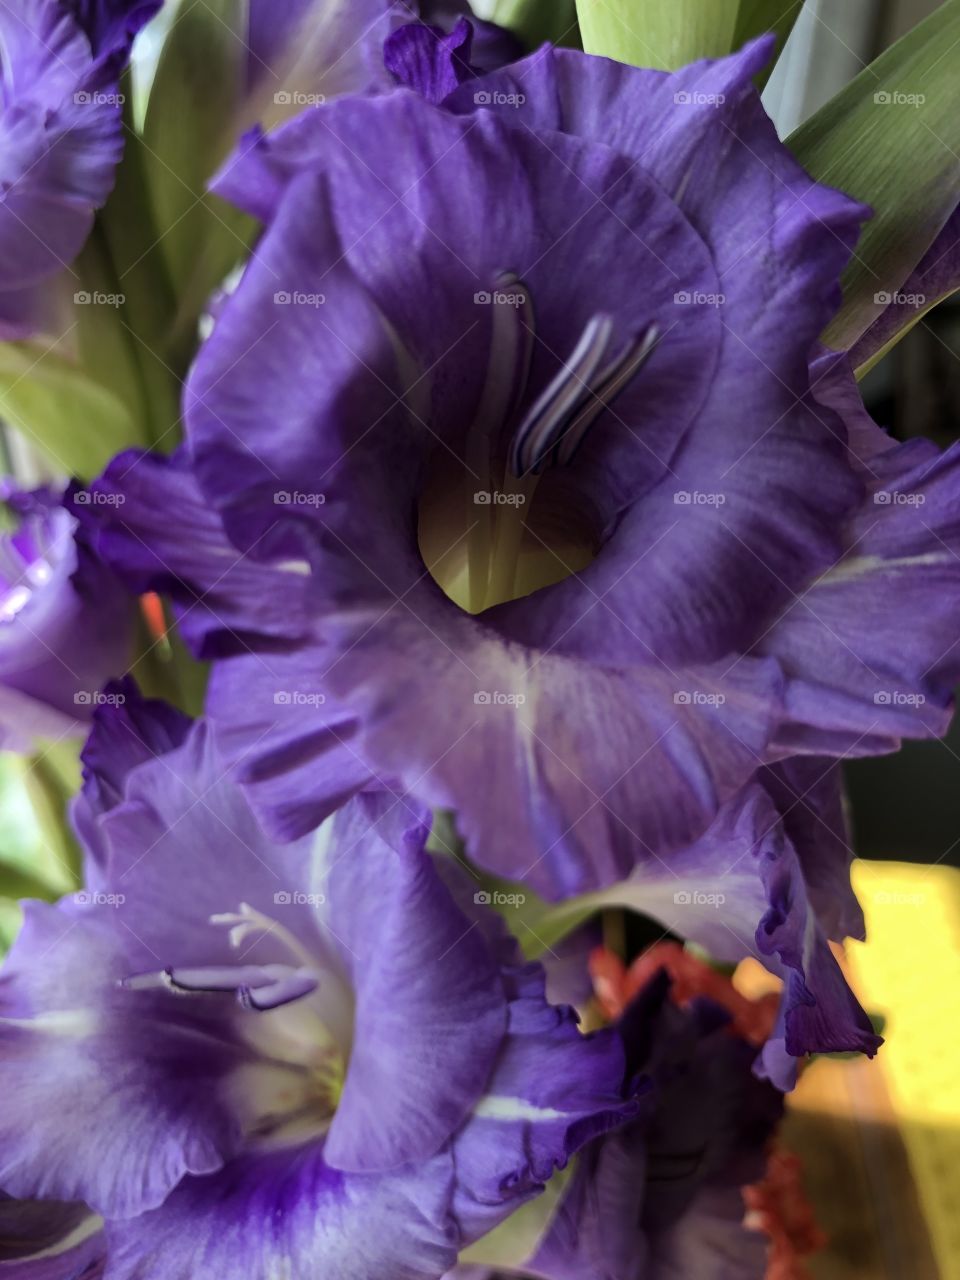 Irises 